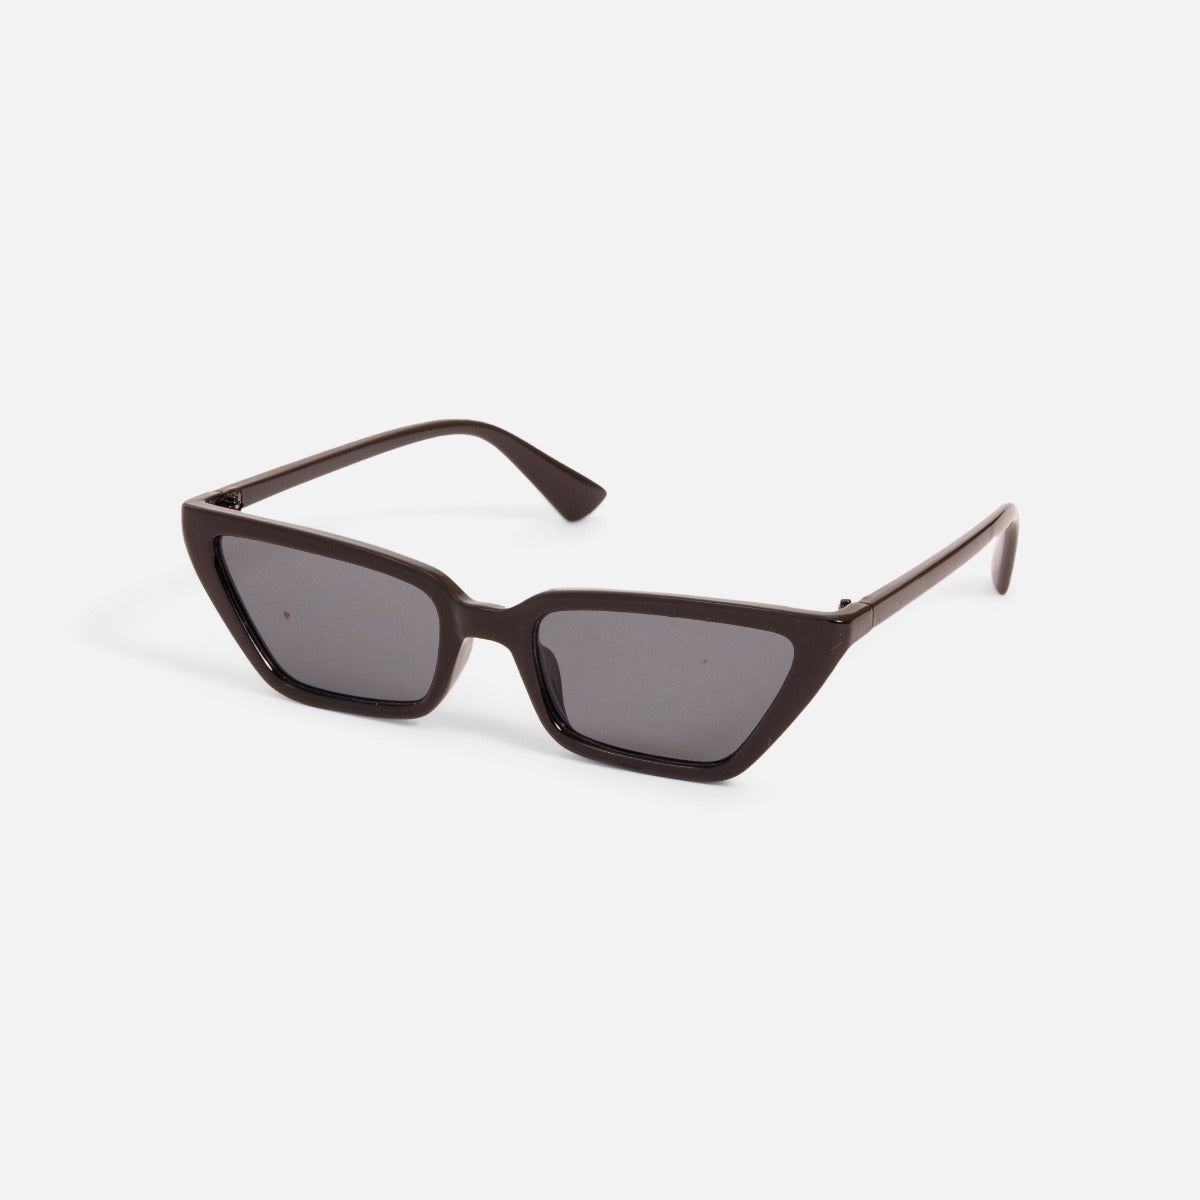 Black rectangle cat eye sunglasses